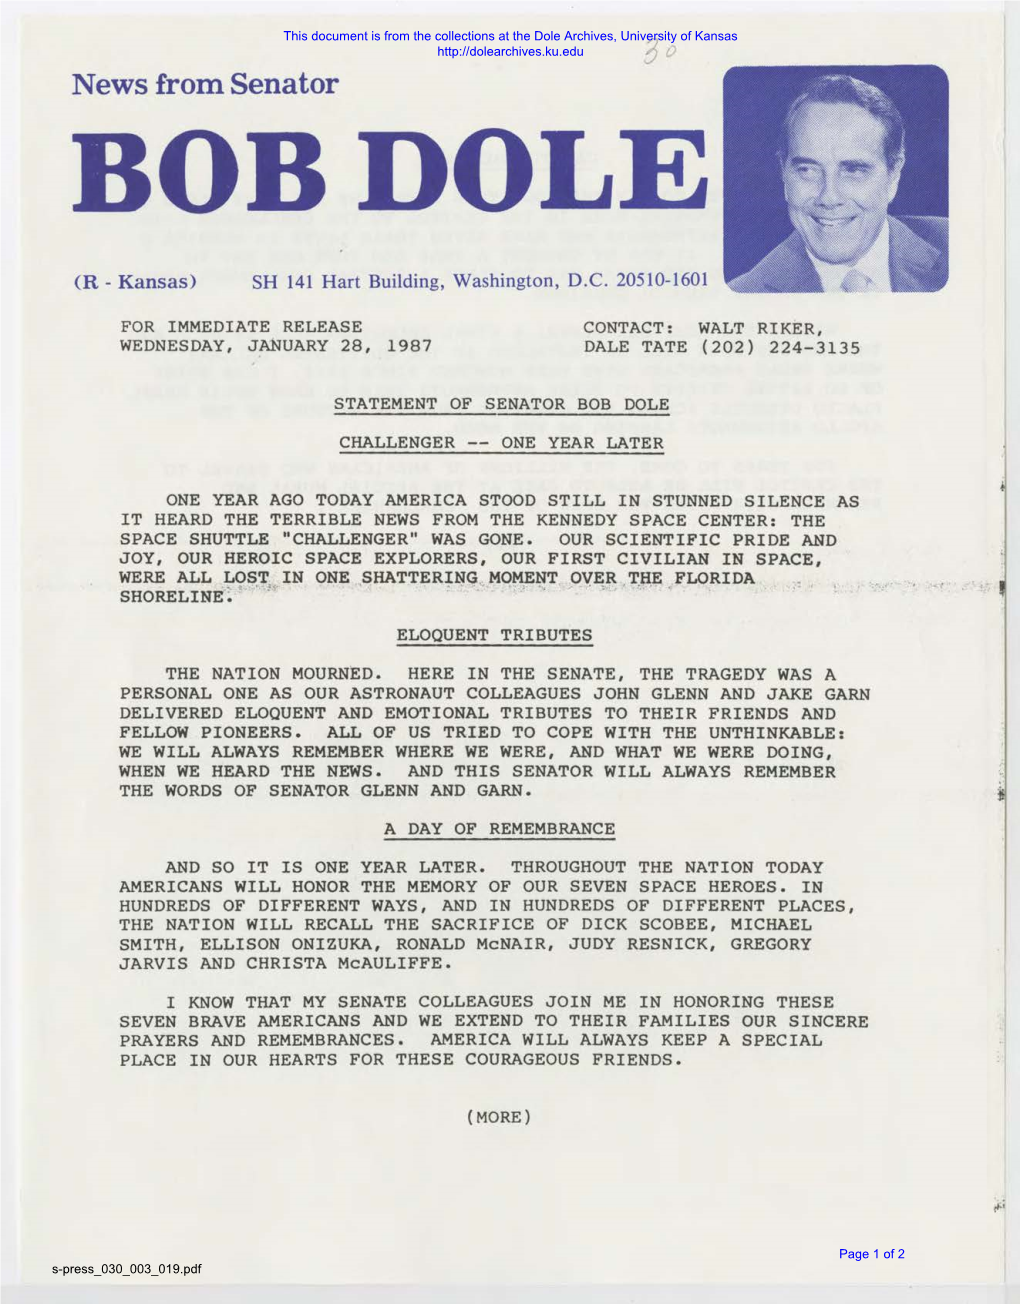 Statement of Senator Bob Dole